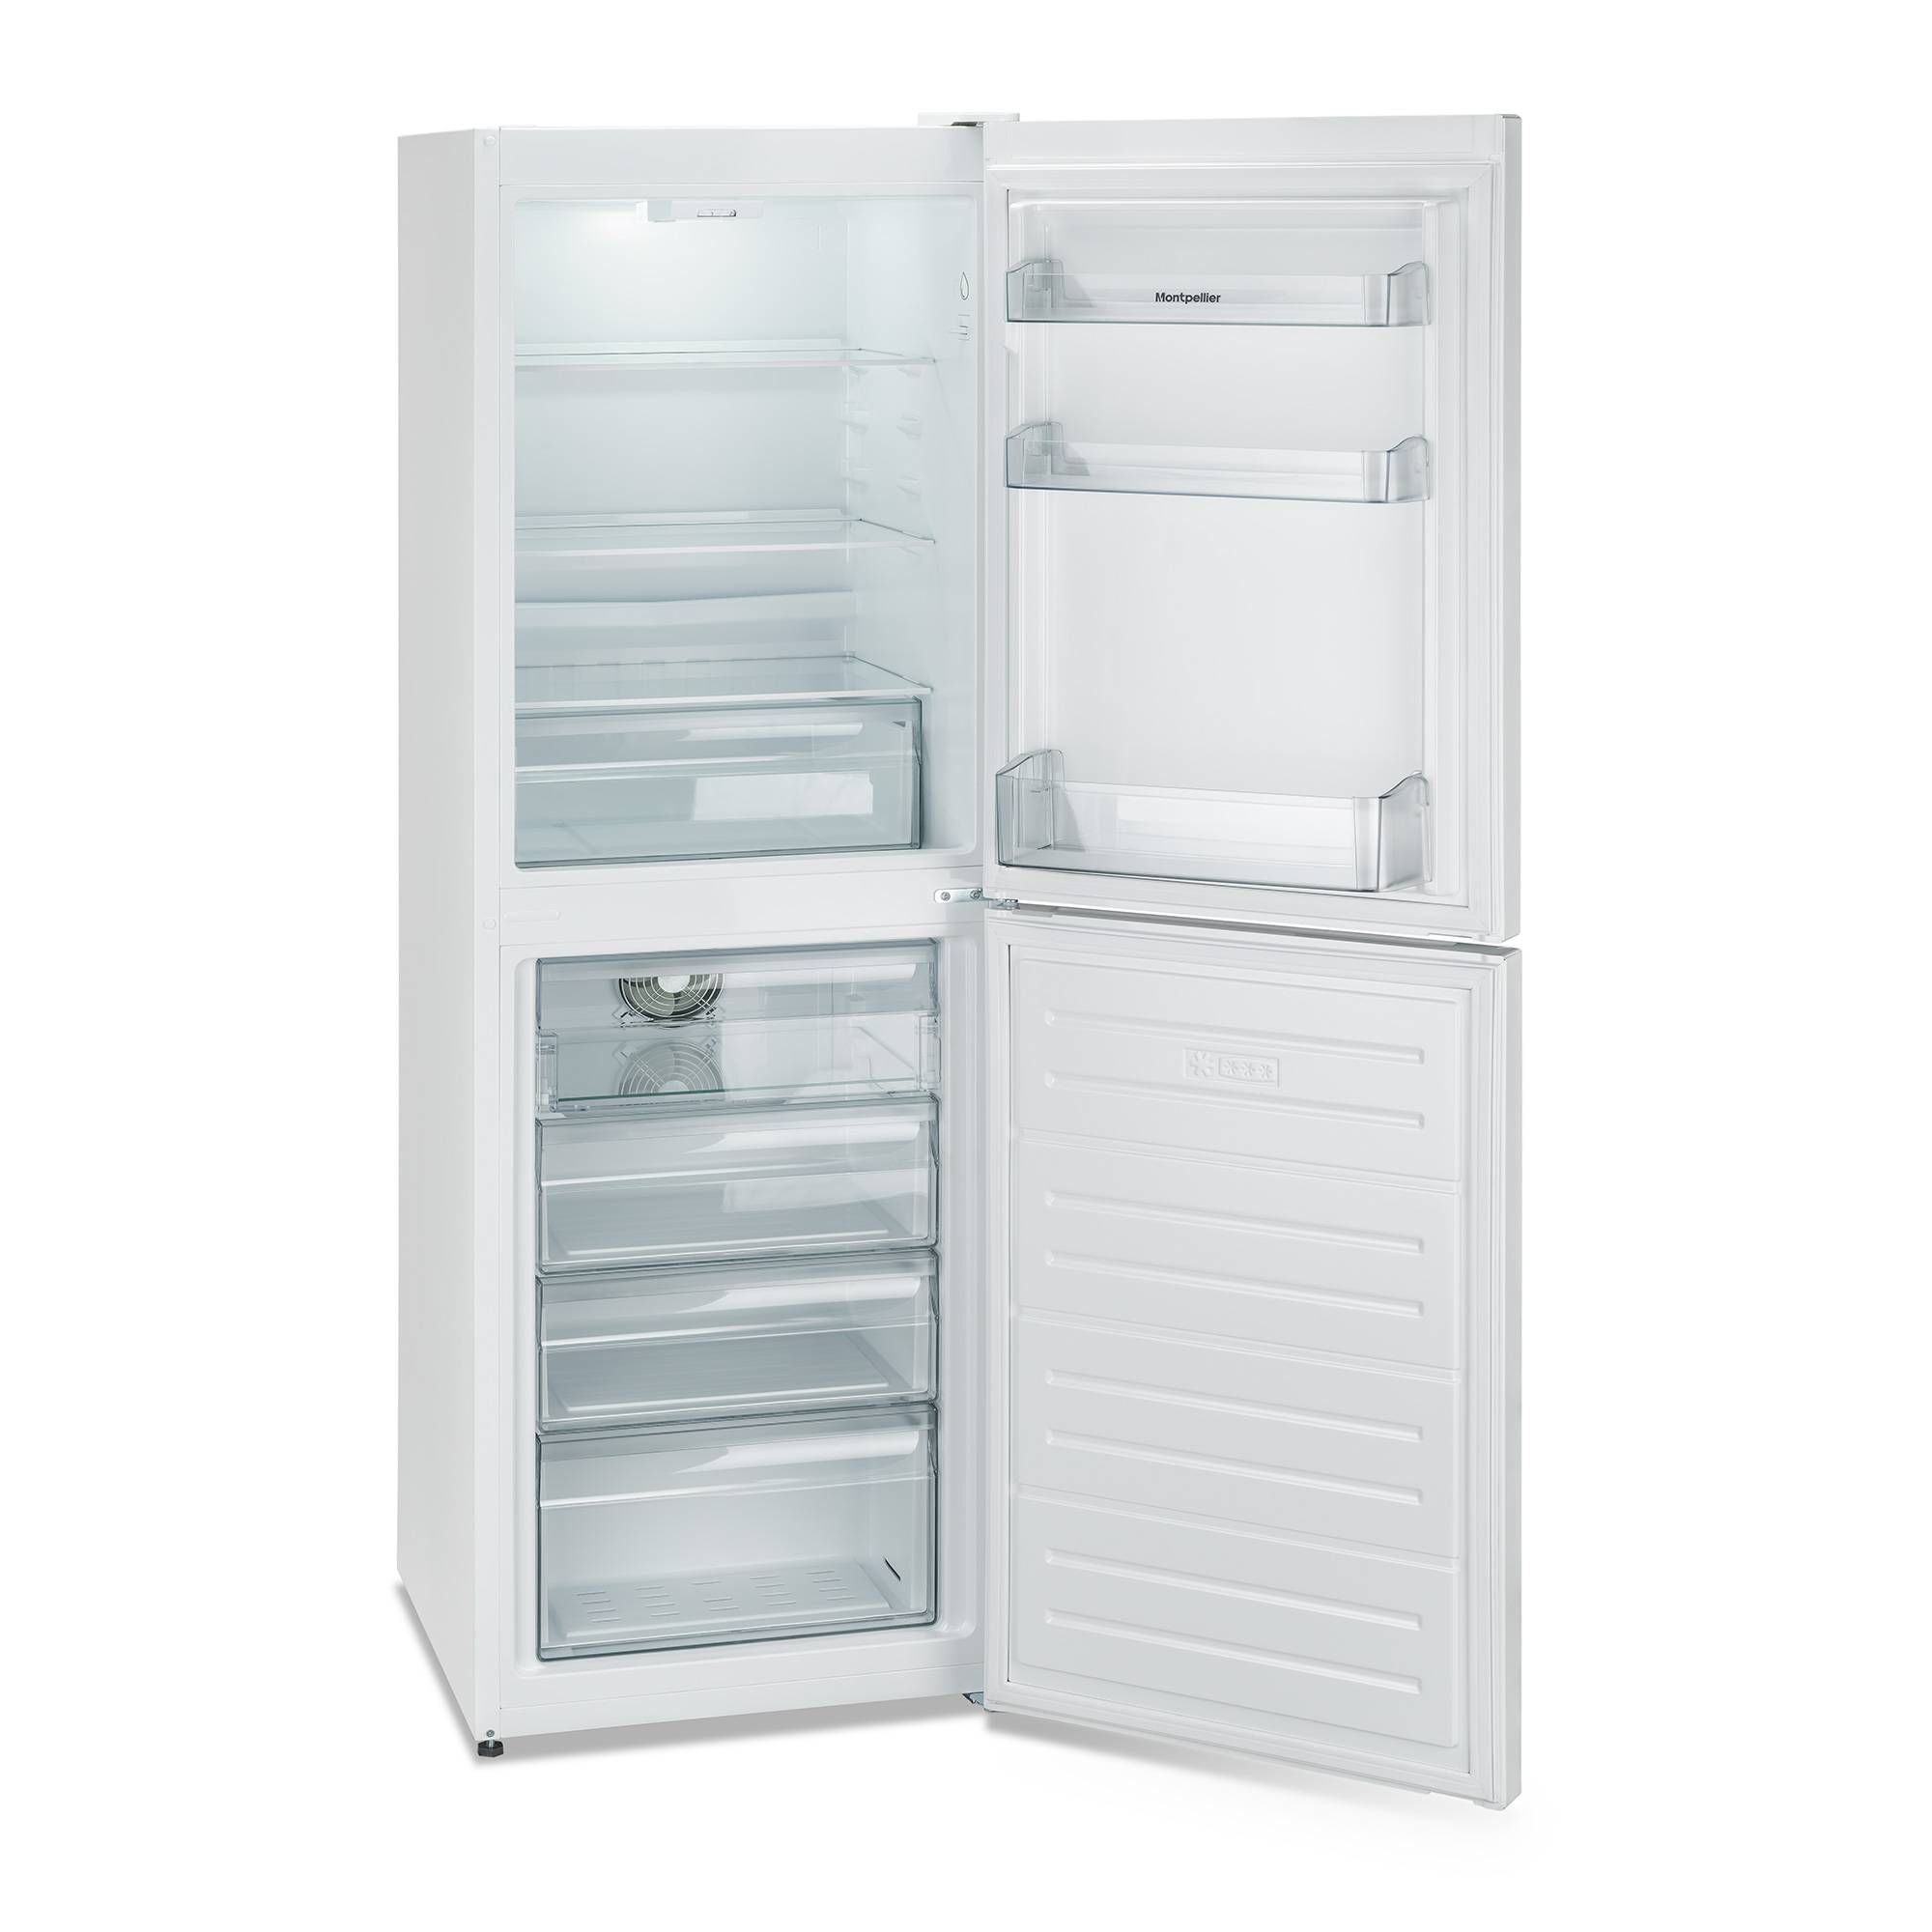 Montpellier MFF165W 50/50 Frost Free Fridge Freezer in White Height 166cm, Width 59.5cm, Depth 54cm